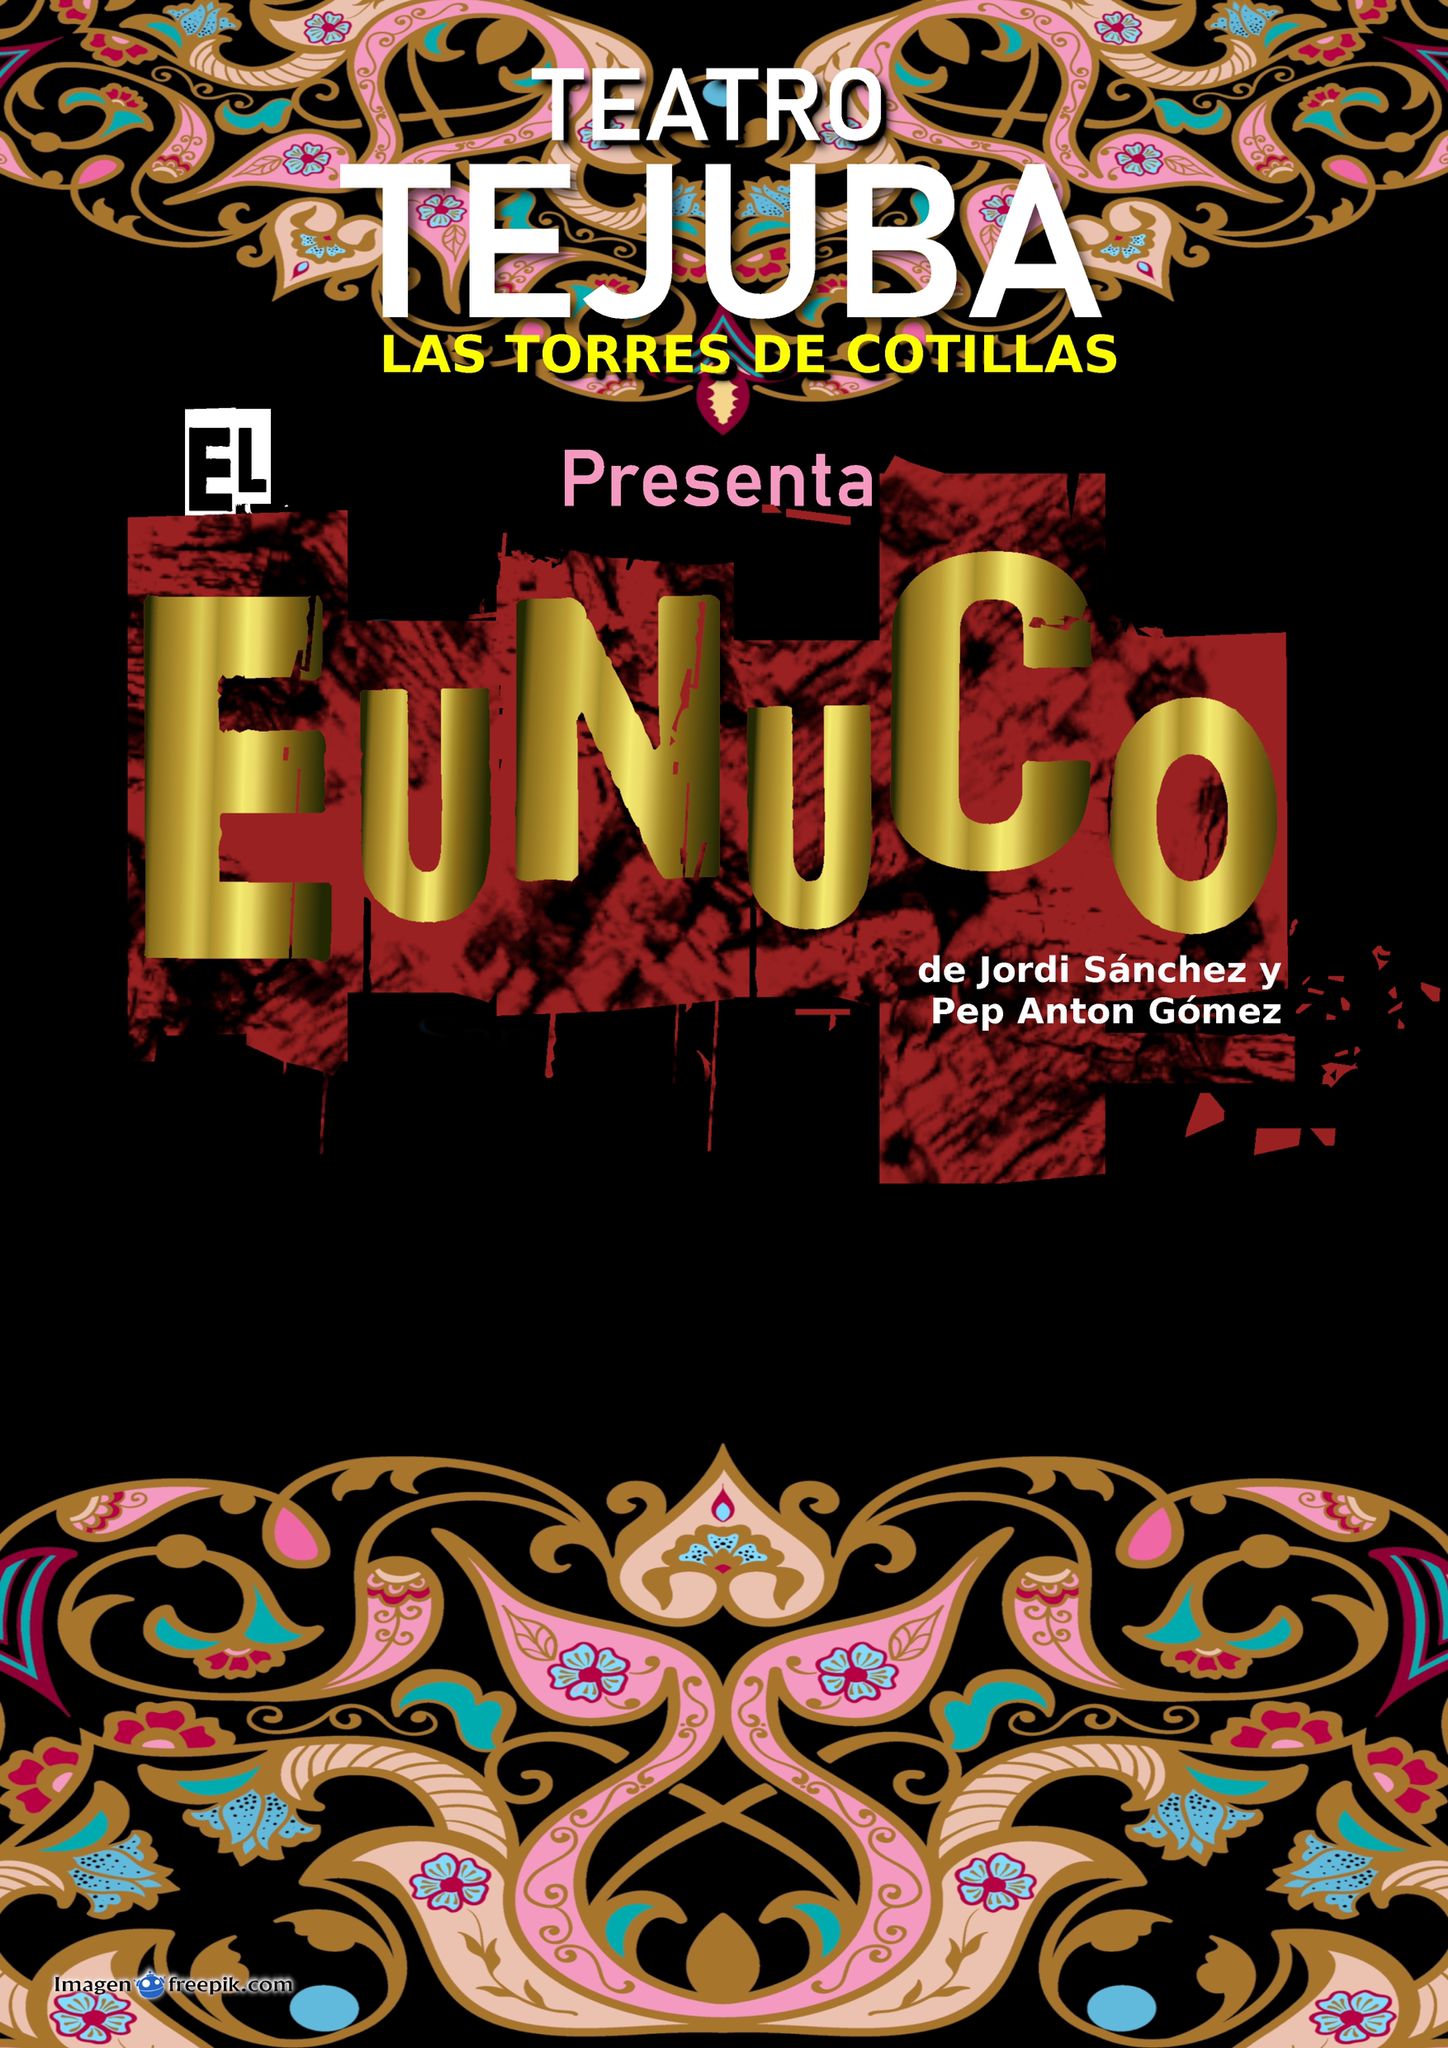 ciclo-de-teatro-amateur-el-eunuco-compania-tejuba-6225d703702229.99097097.jpeg